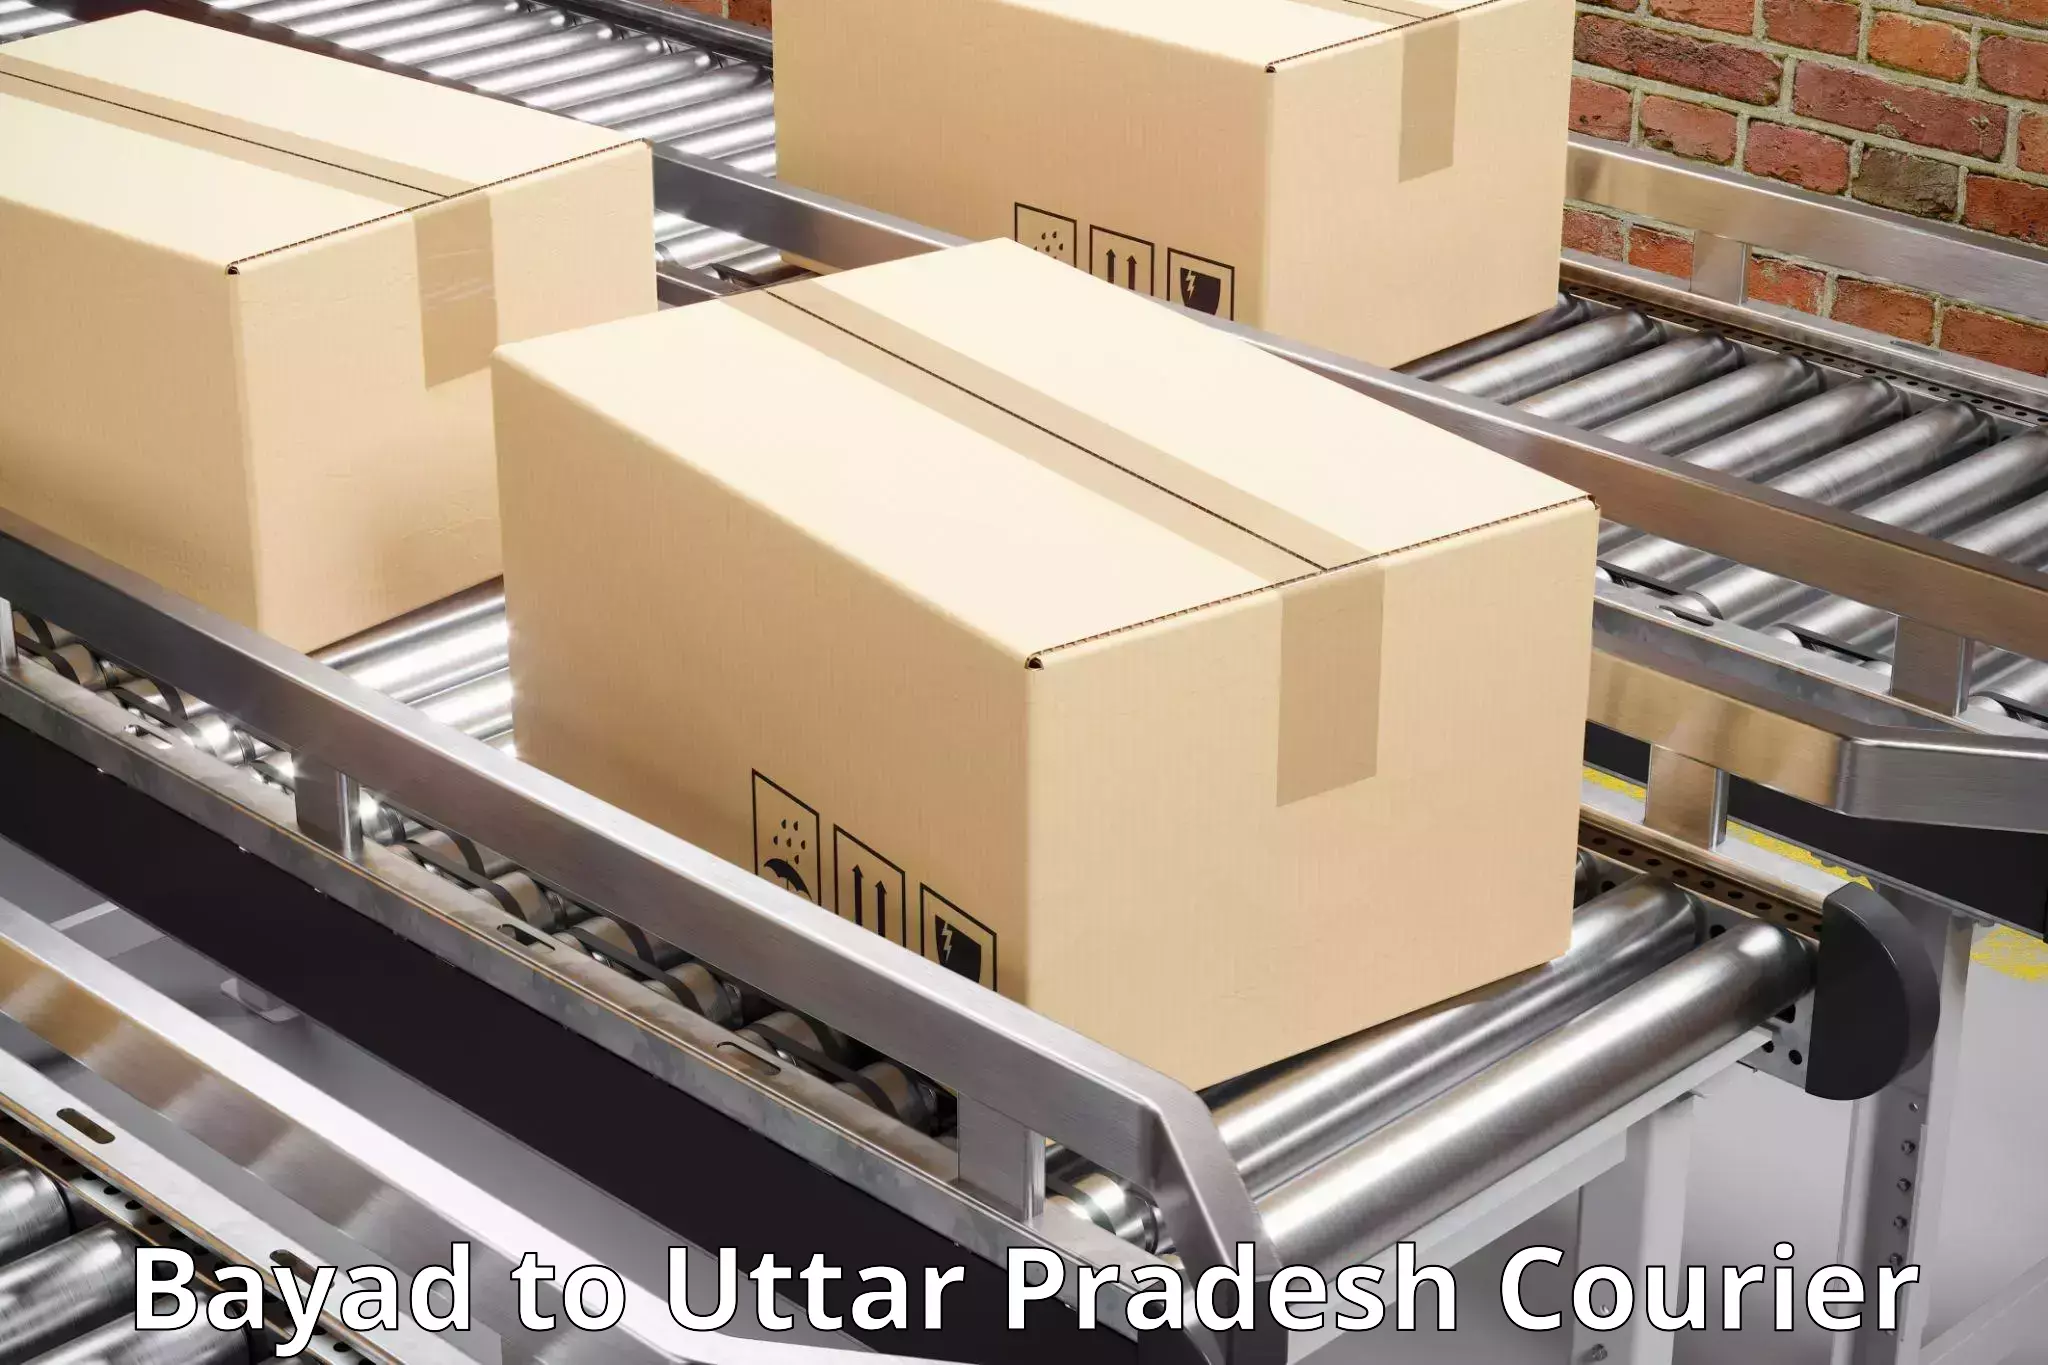 Multi-service courier options Bayad to Uttar Pradesh